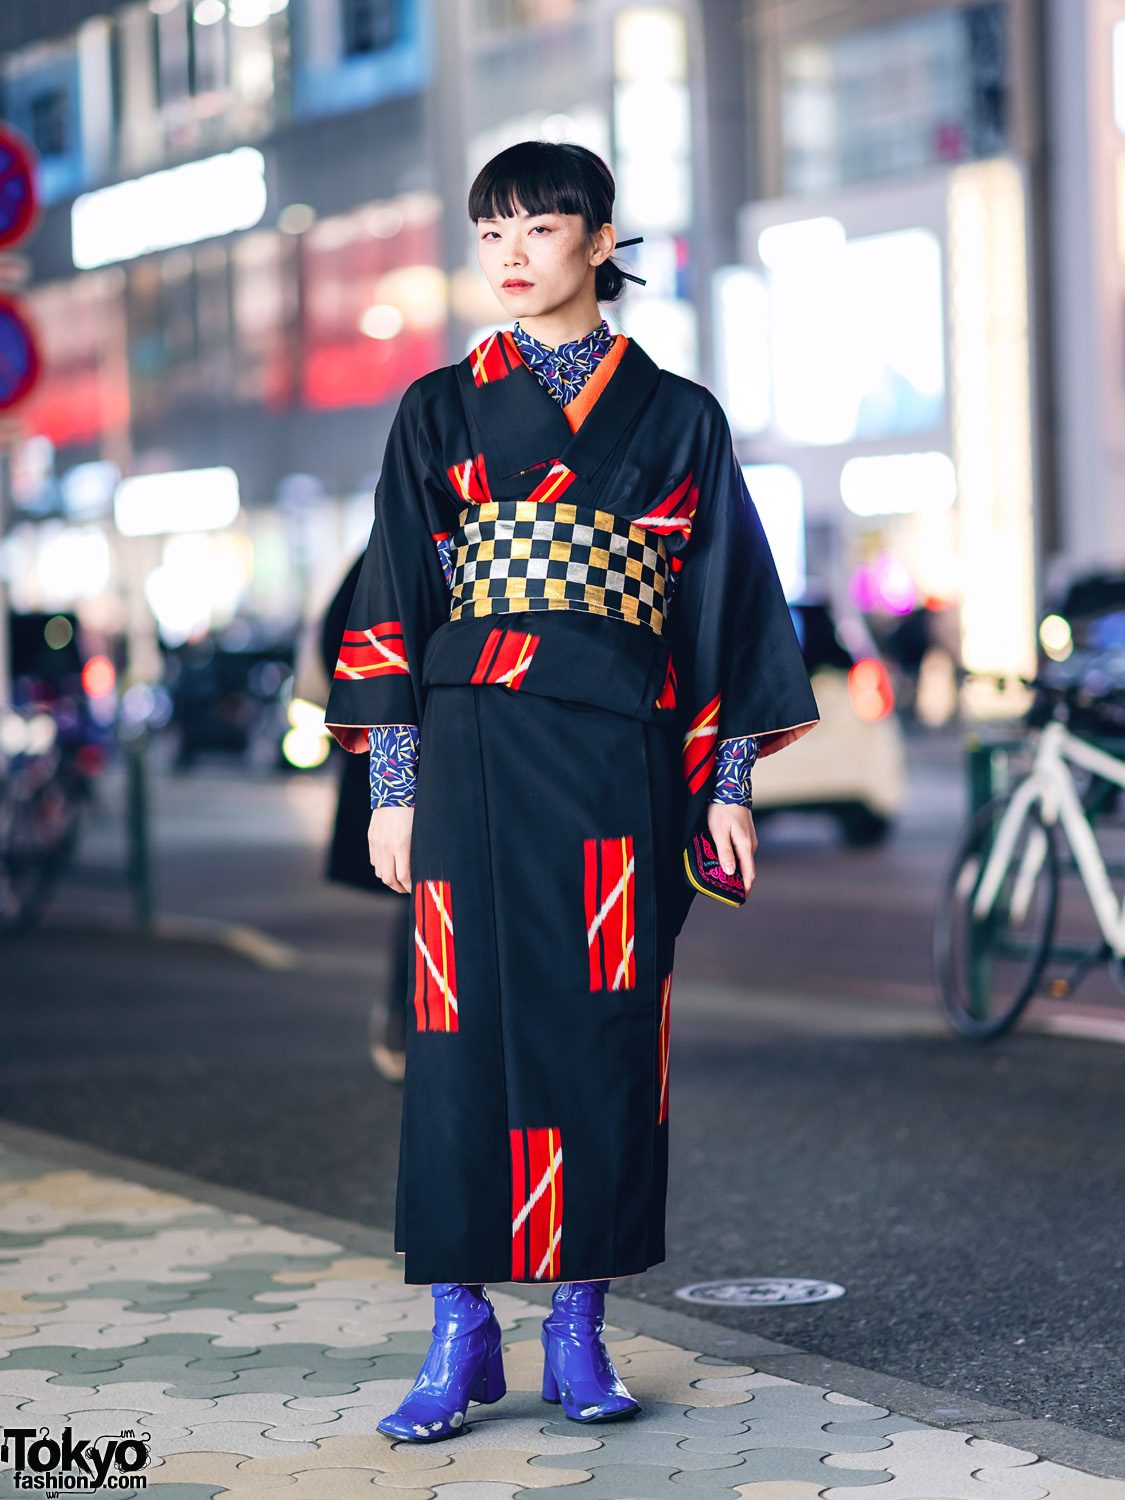 Vintage Geometric Print Japanese Kimono, Leaf Print Shirt, Checkered Obi & Vinyl Boots in Harajuku